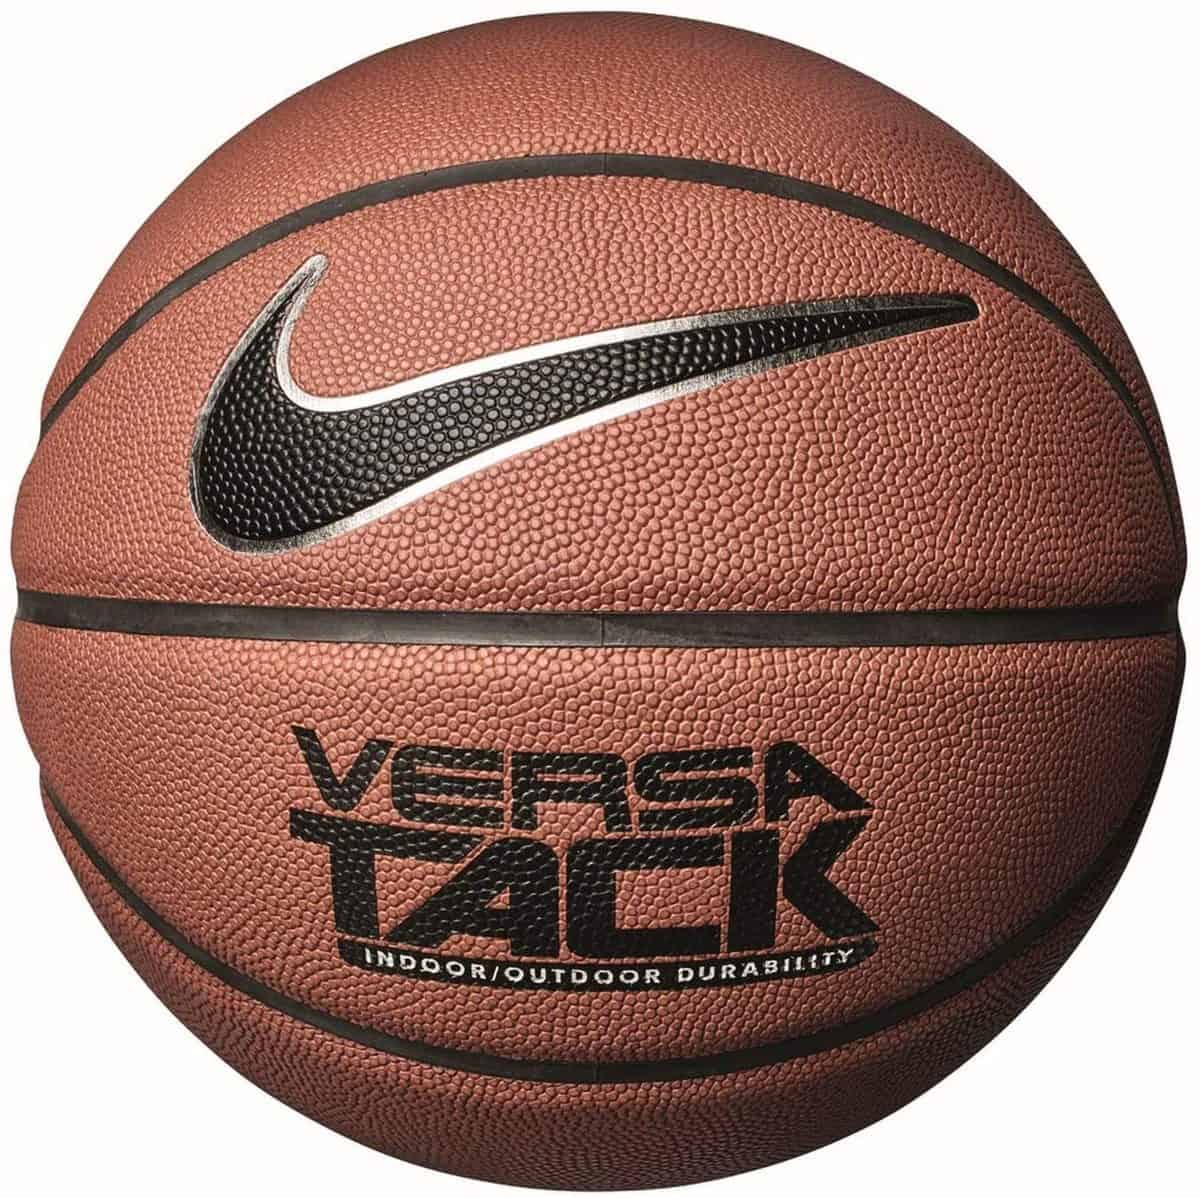 Nike Versa Tack Basketball (Größe 7) - für 14,99 € inkl. Versand (Foot Locker FLX) statt 21,40 €